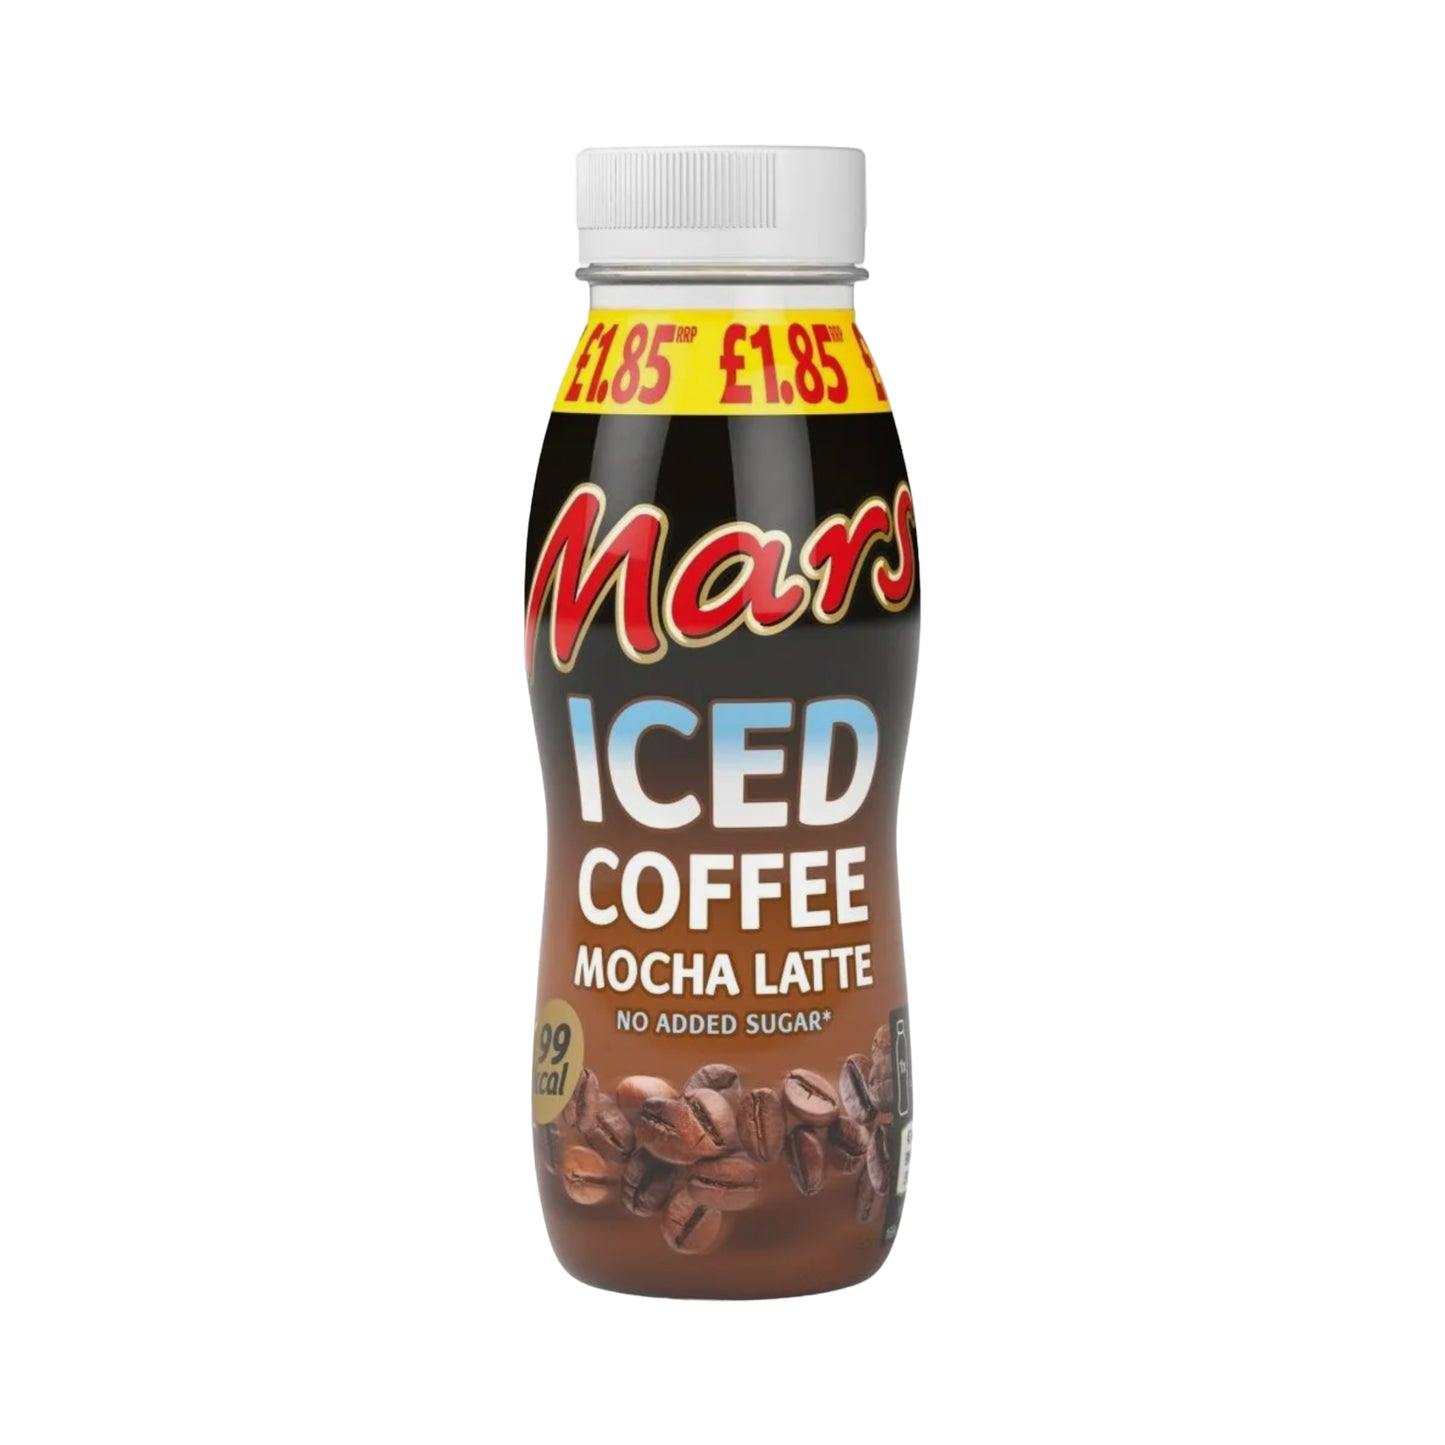 Mars Iced Coffee Mocha Latte Milk Drink - 250ml (PMP £1.85)